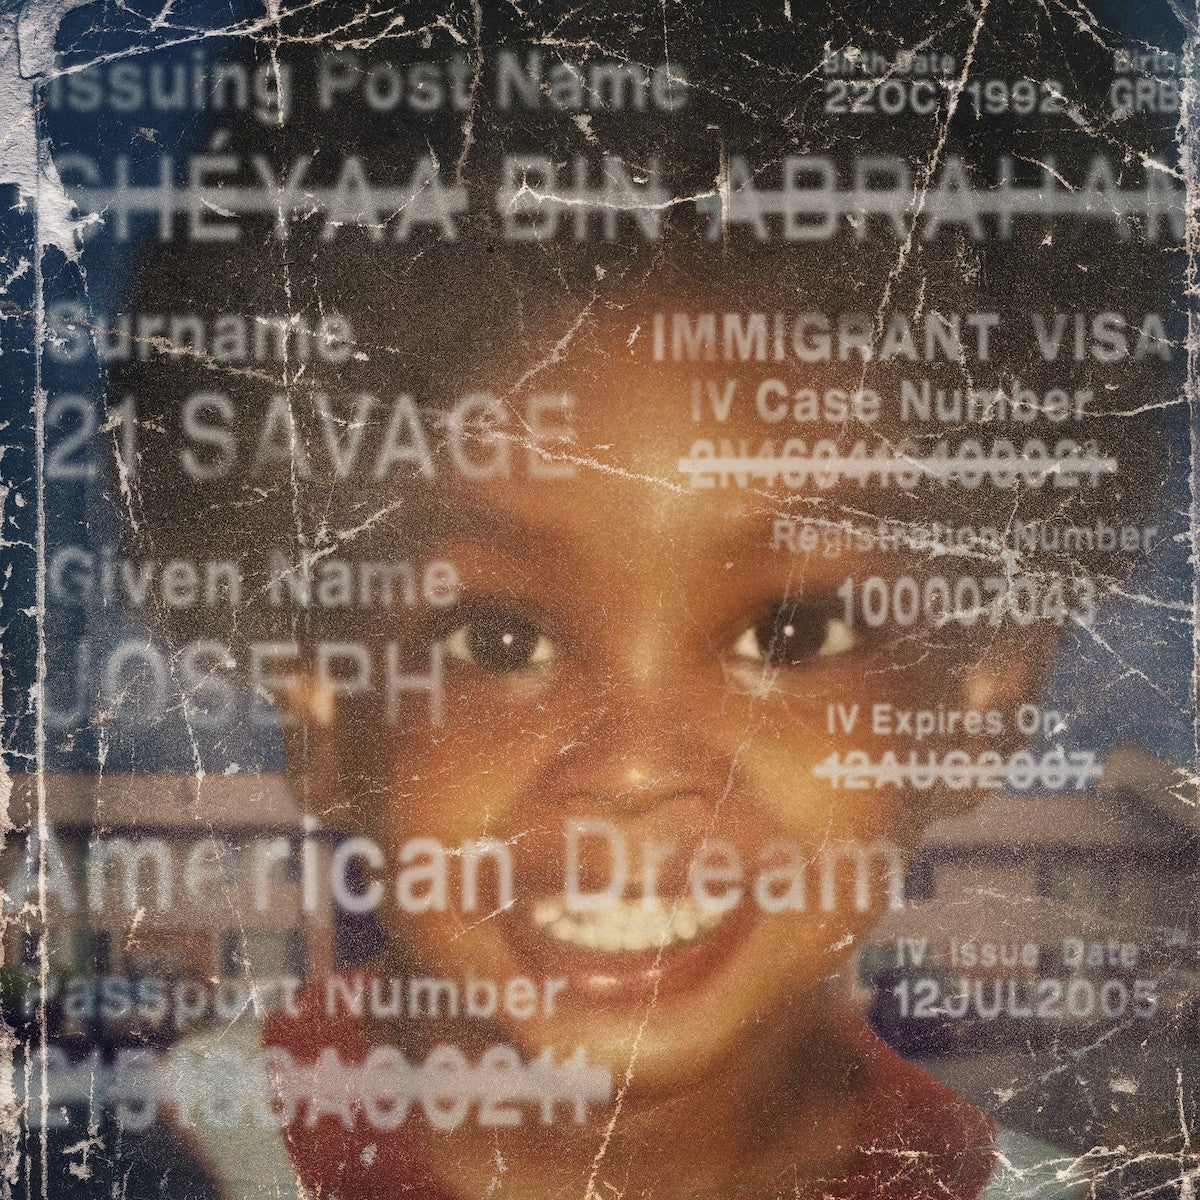 American Dream: Red Double Vinyl LP